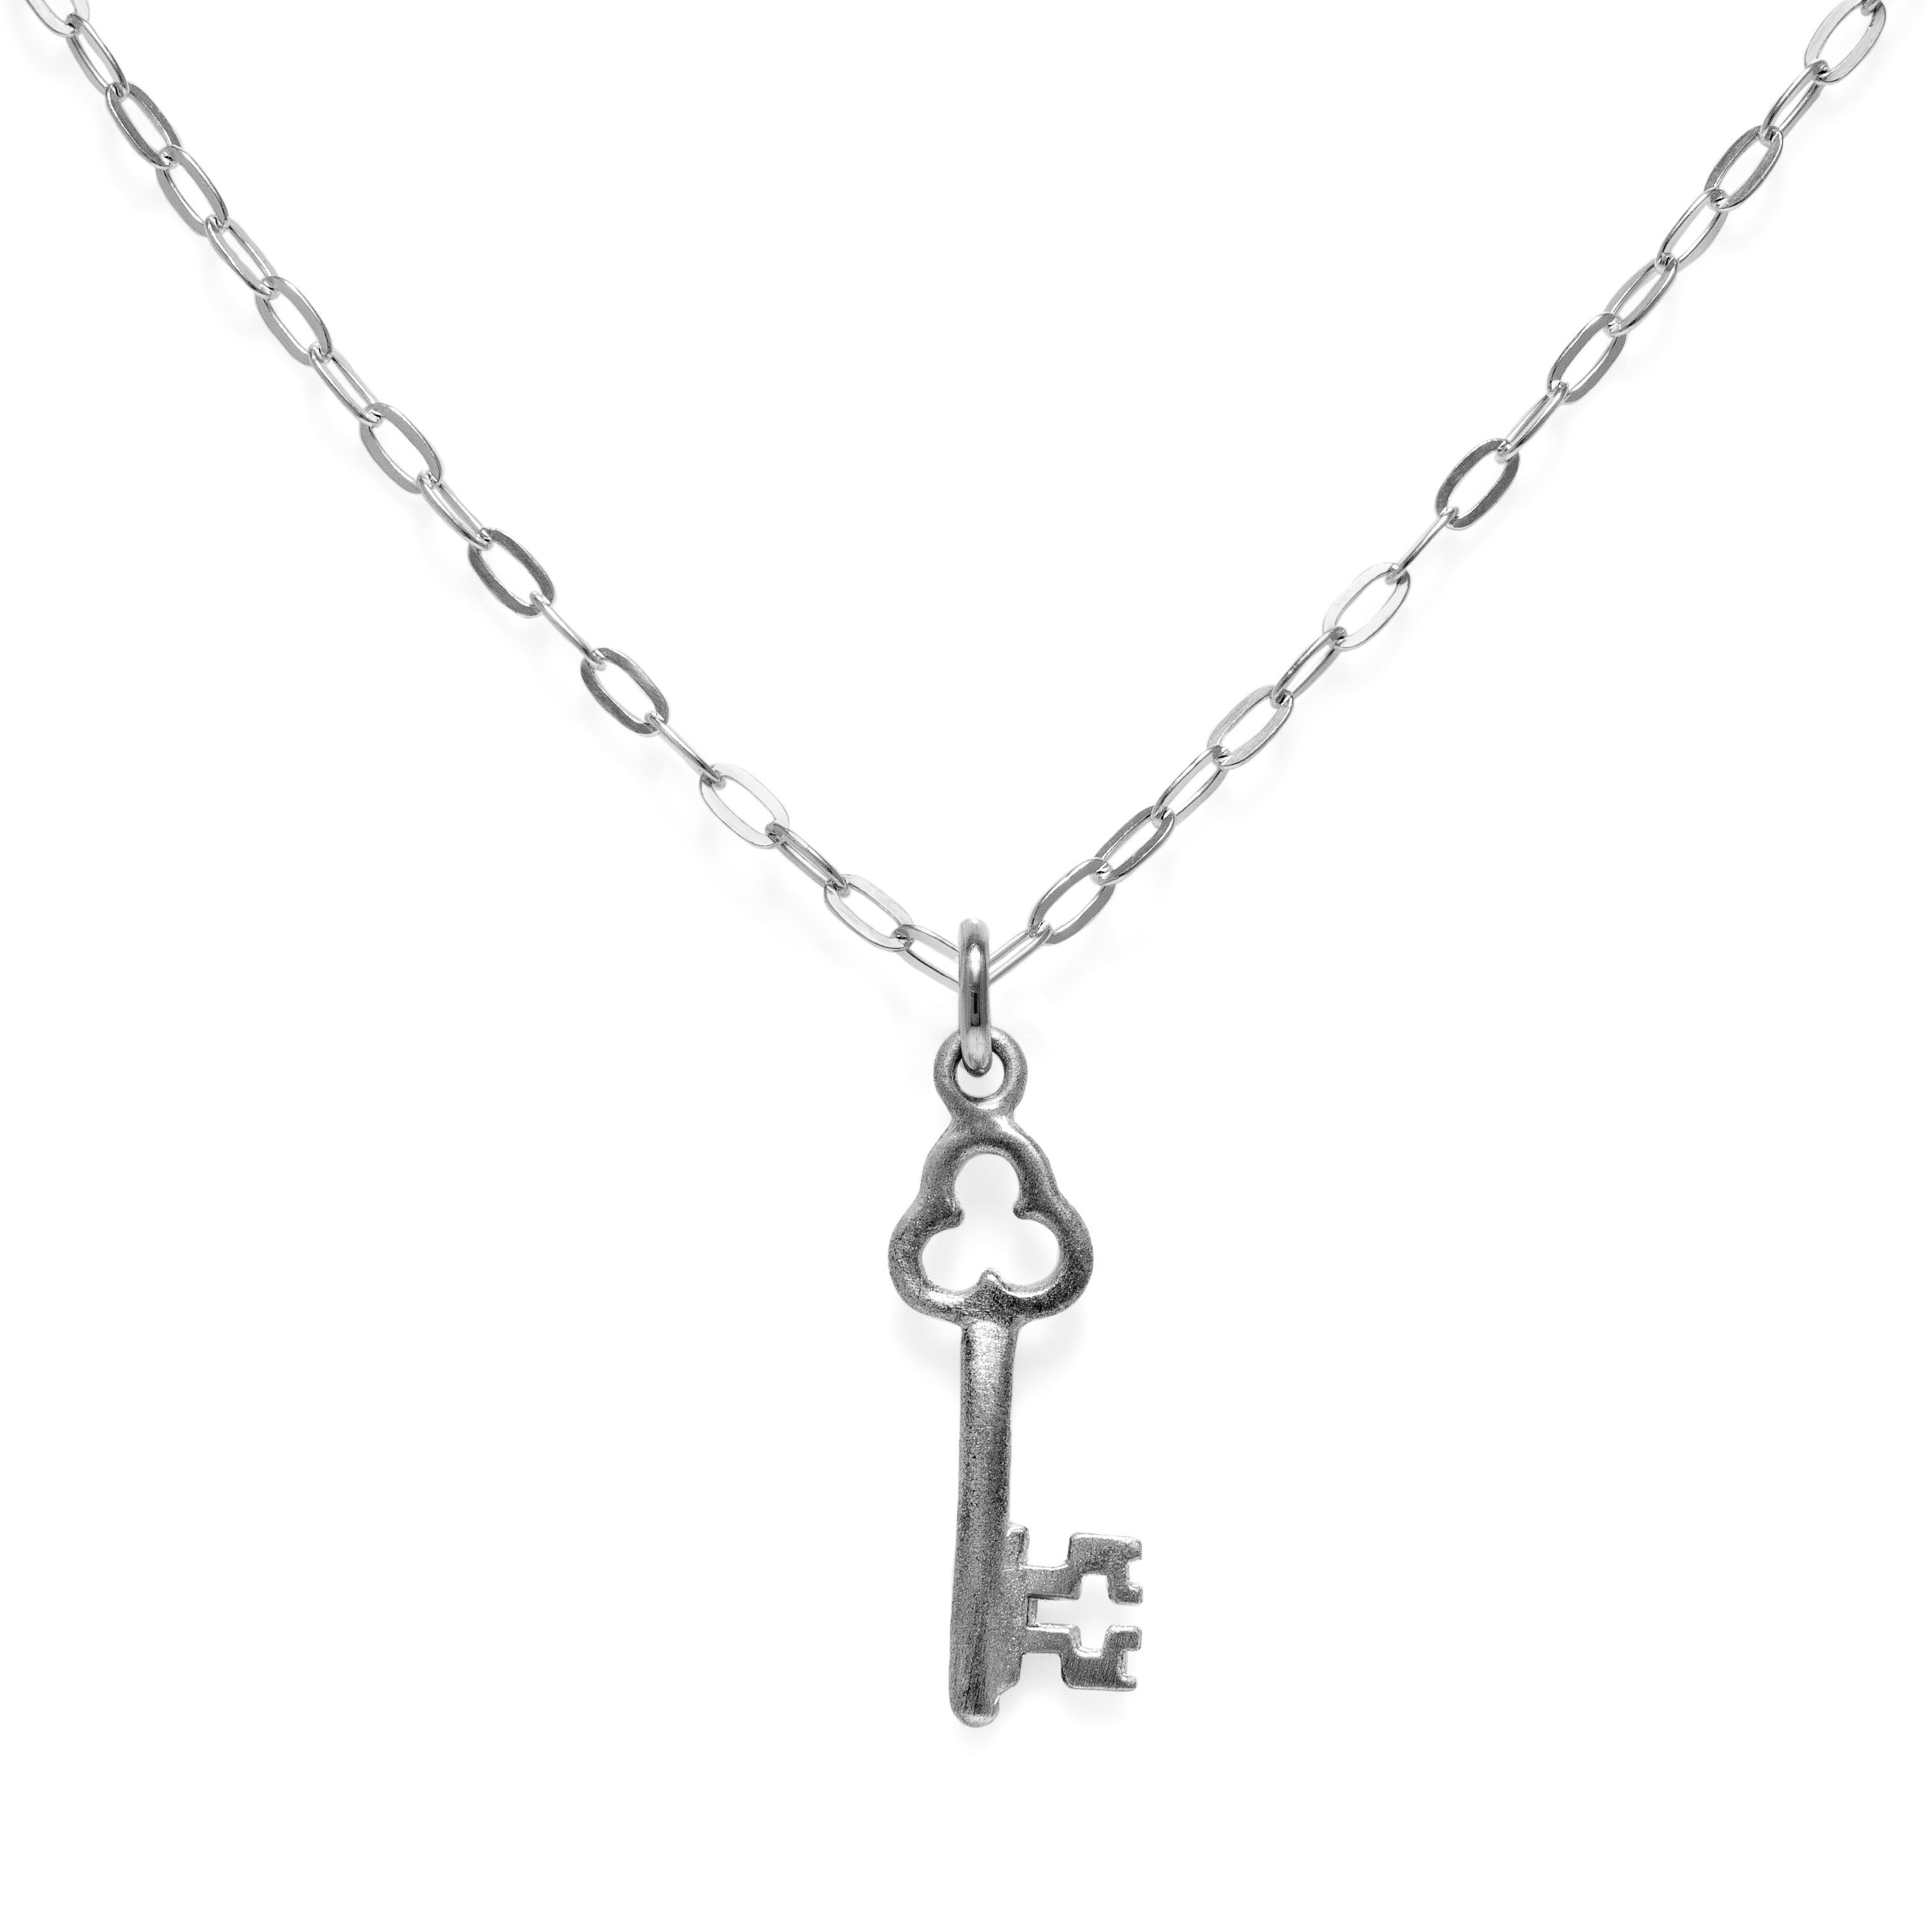 Silver Key Trinket Necklace - The Mother Maker